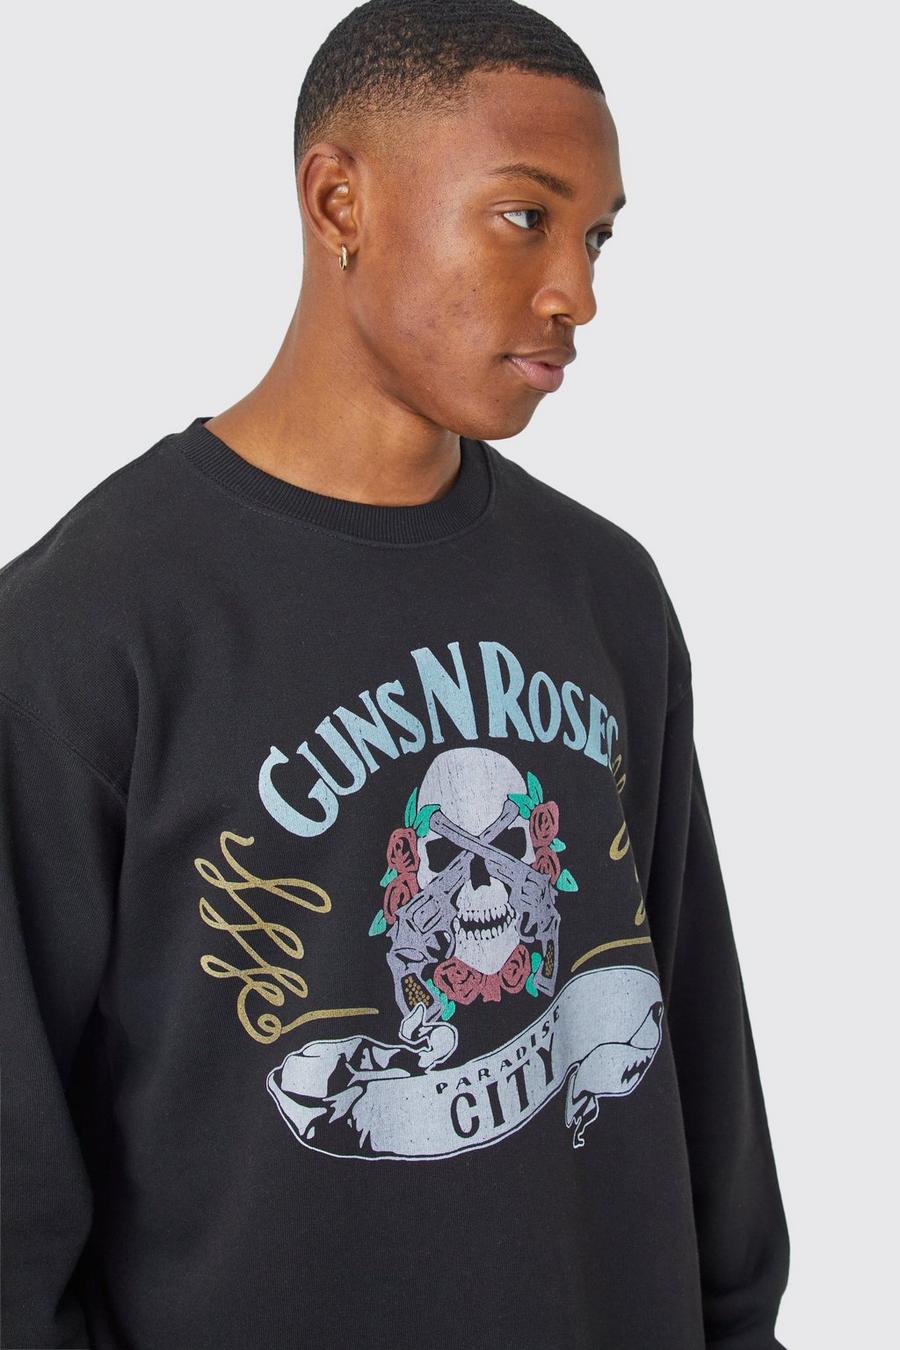 Black Oversized Guns N Roses Skull City License Sweatshirt image number 1